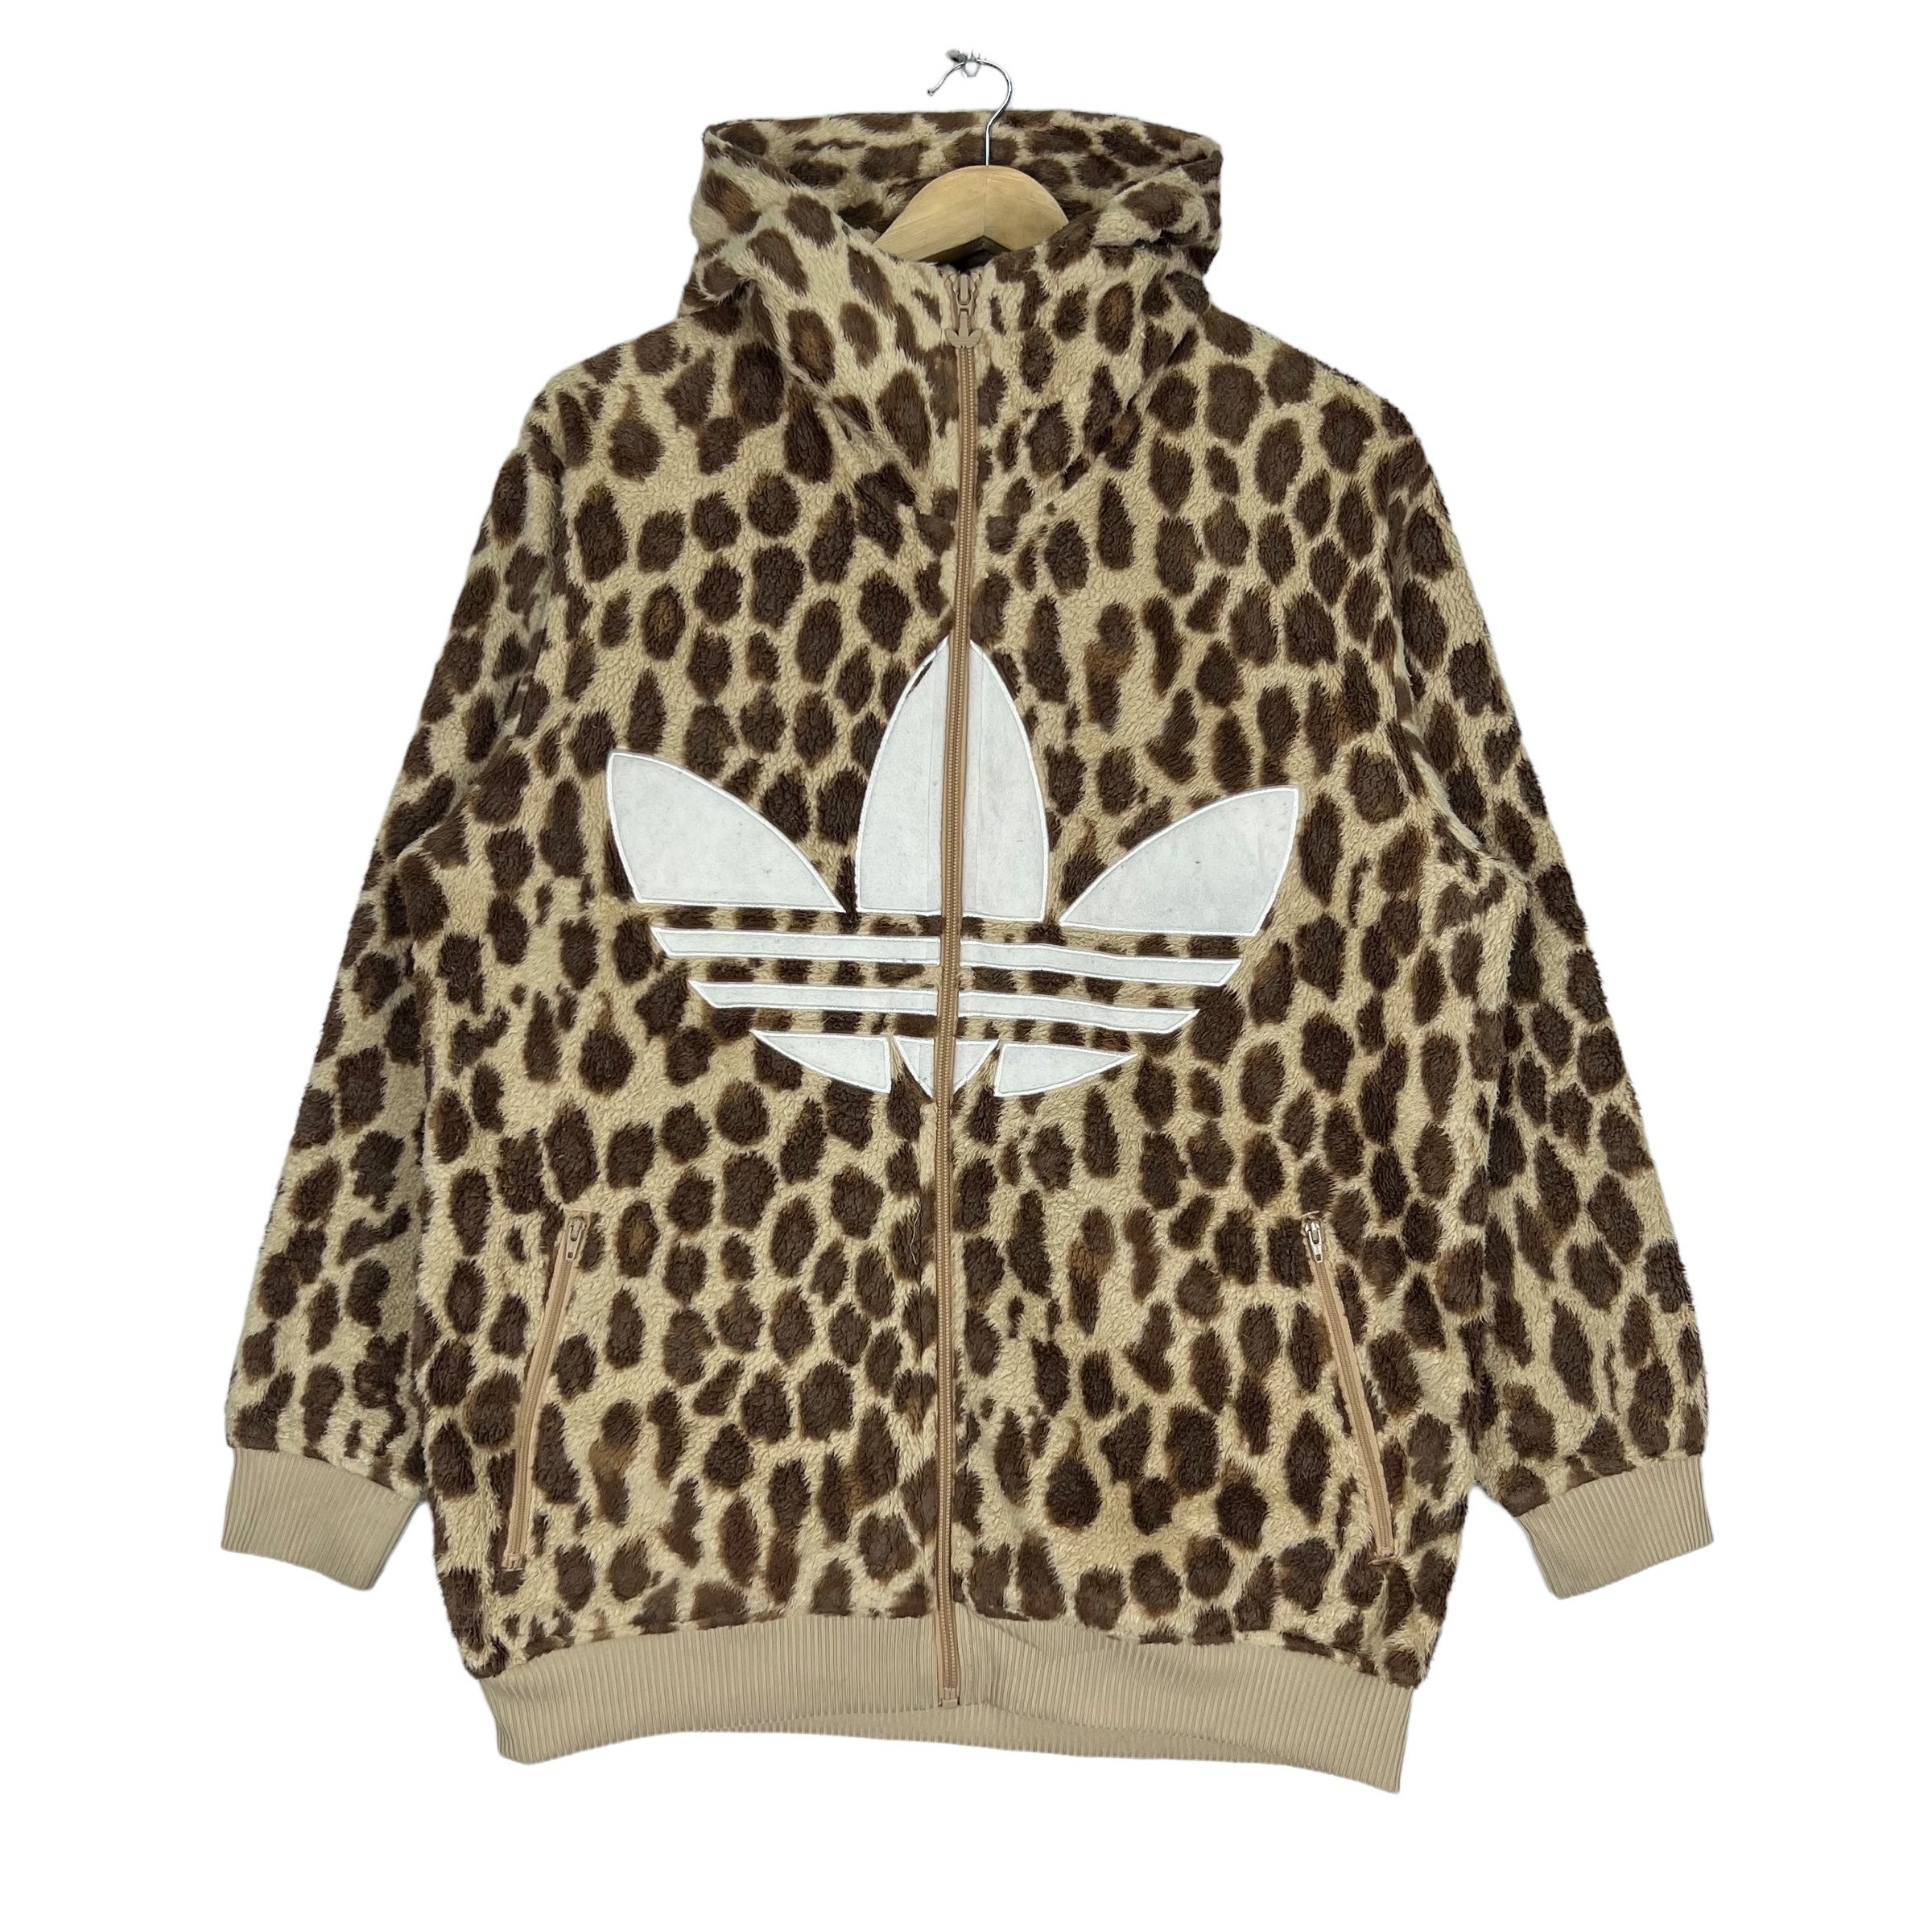 alias mandig grit Adidas Leopard Design Zipper Hoodies Free Size - Etsy